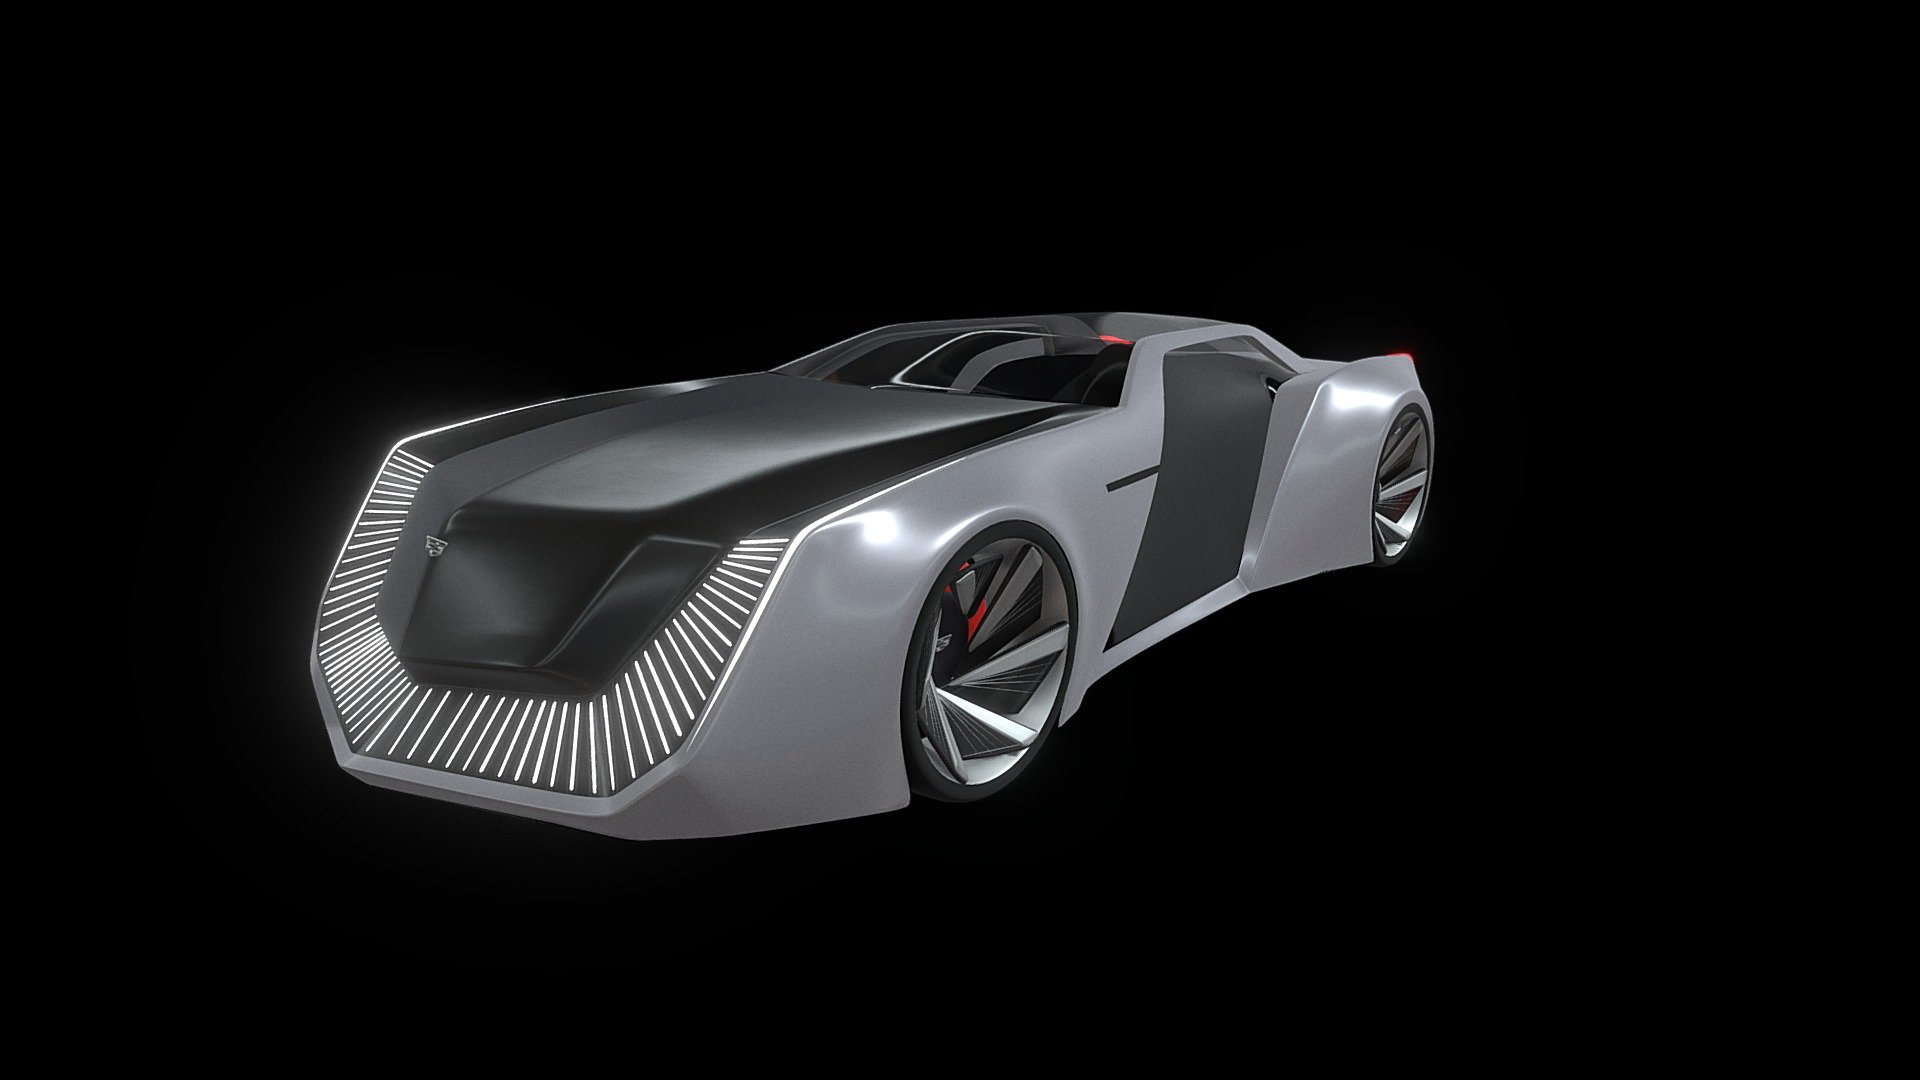 Transportation Descom 2 final, made 100% in Gravity Sketch - Cadillac x Gensler Eldorado Concept - 3D model by Cy (@cyburkhart) 3d model